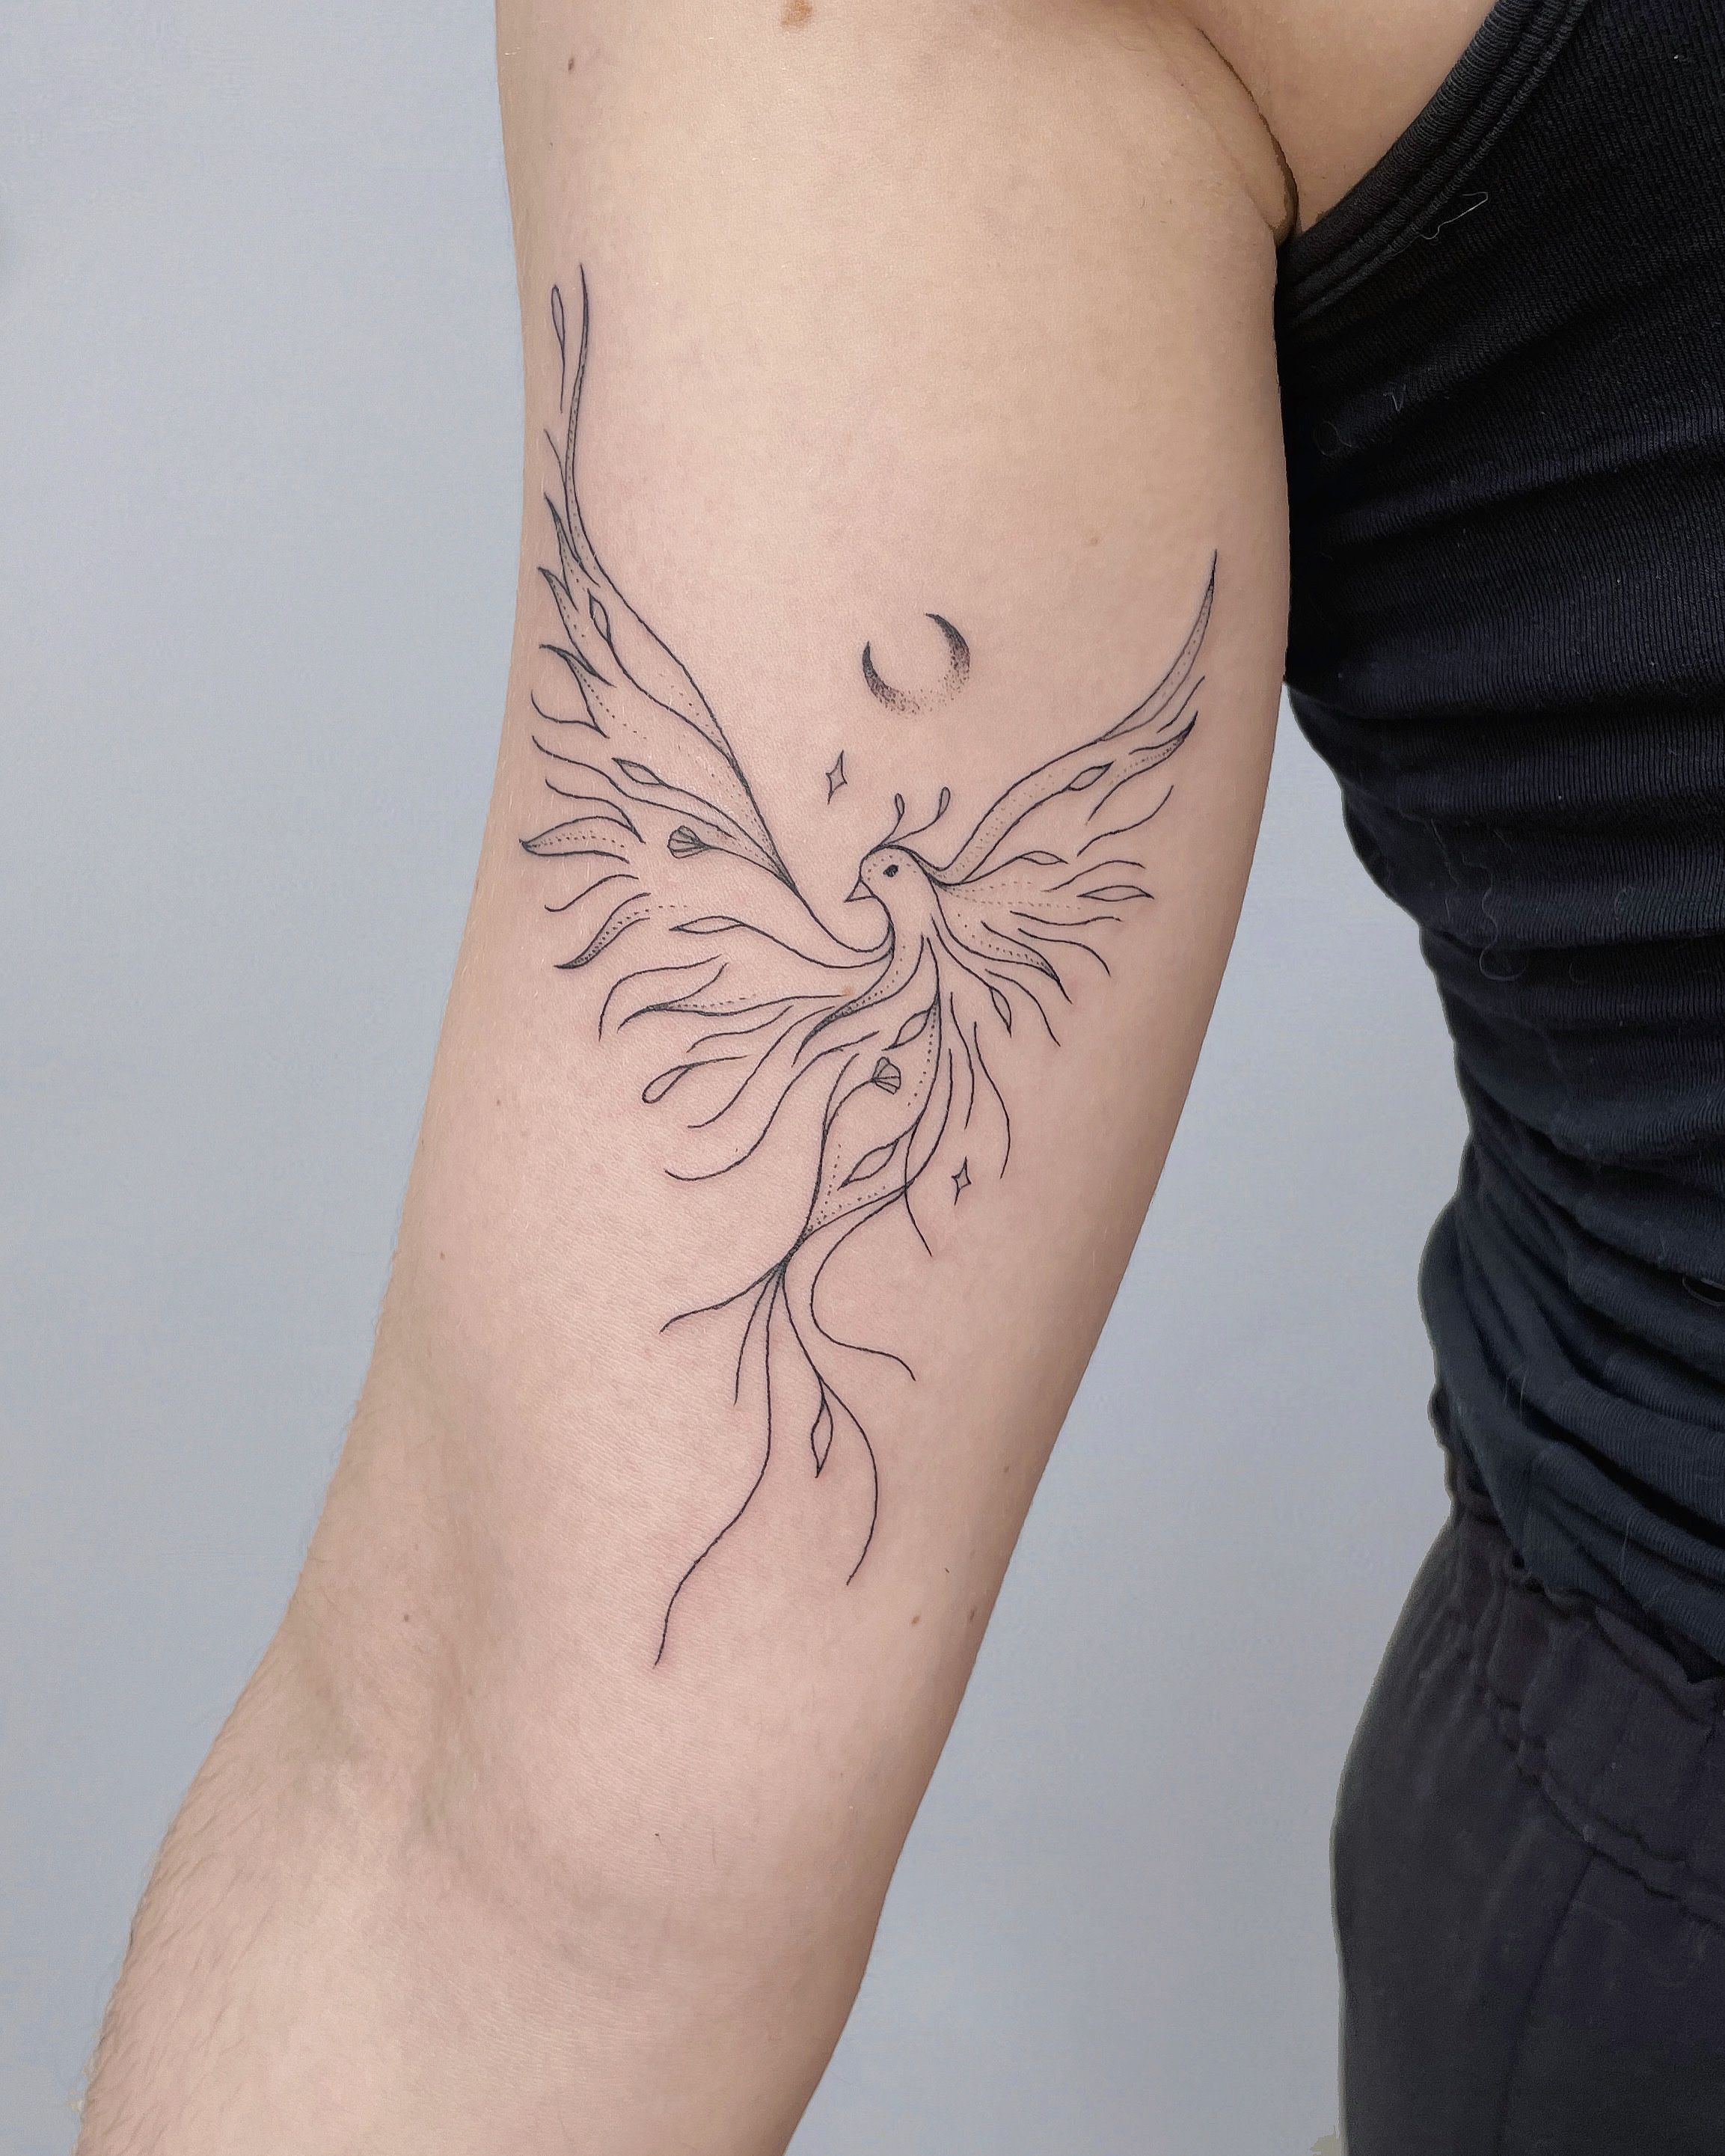 10 Intricate Geometric Tattoo Design Ideas If You Want A Big Ink